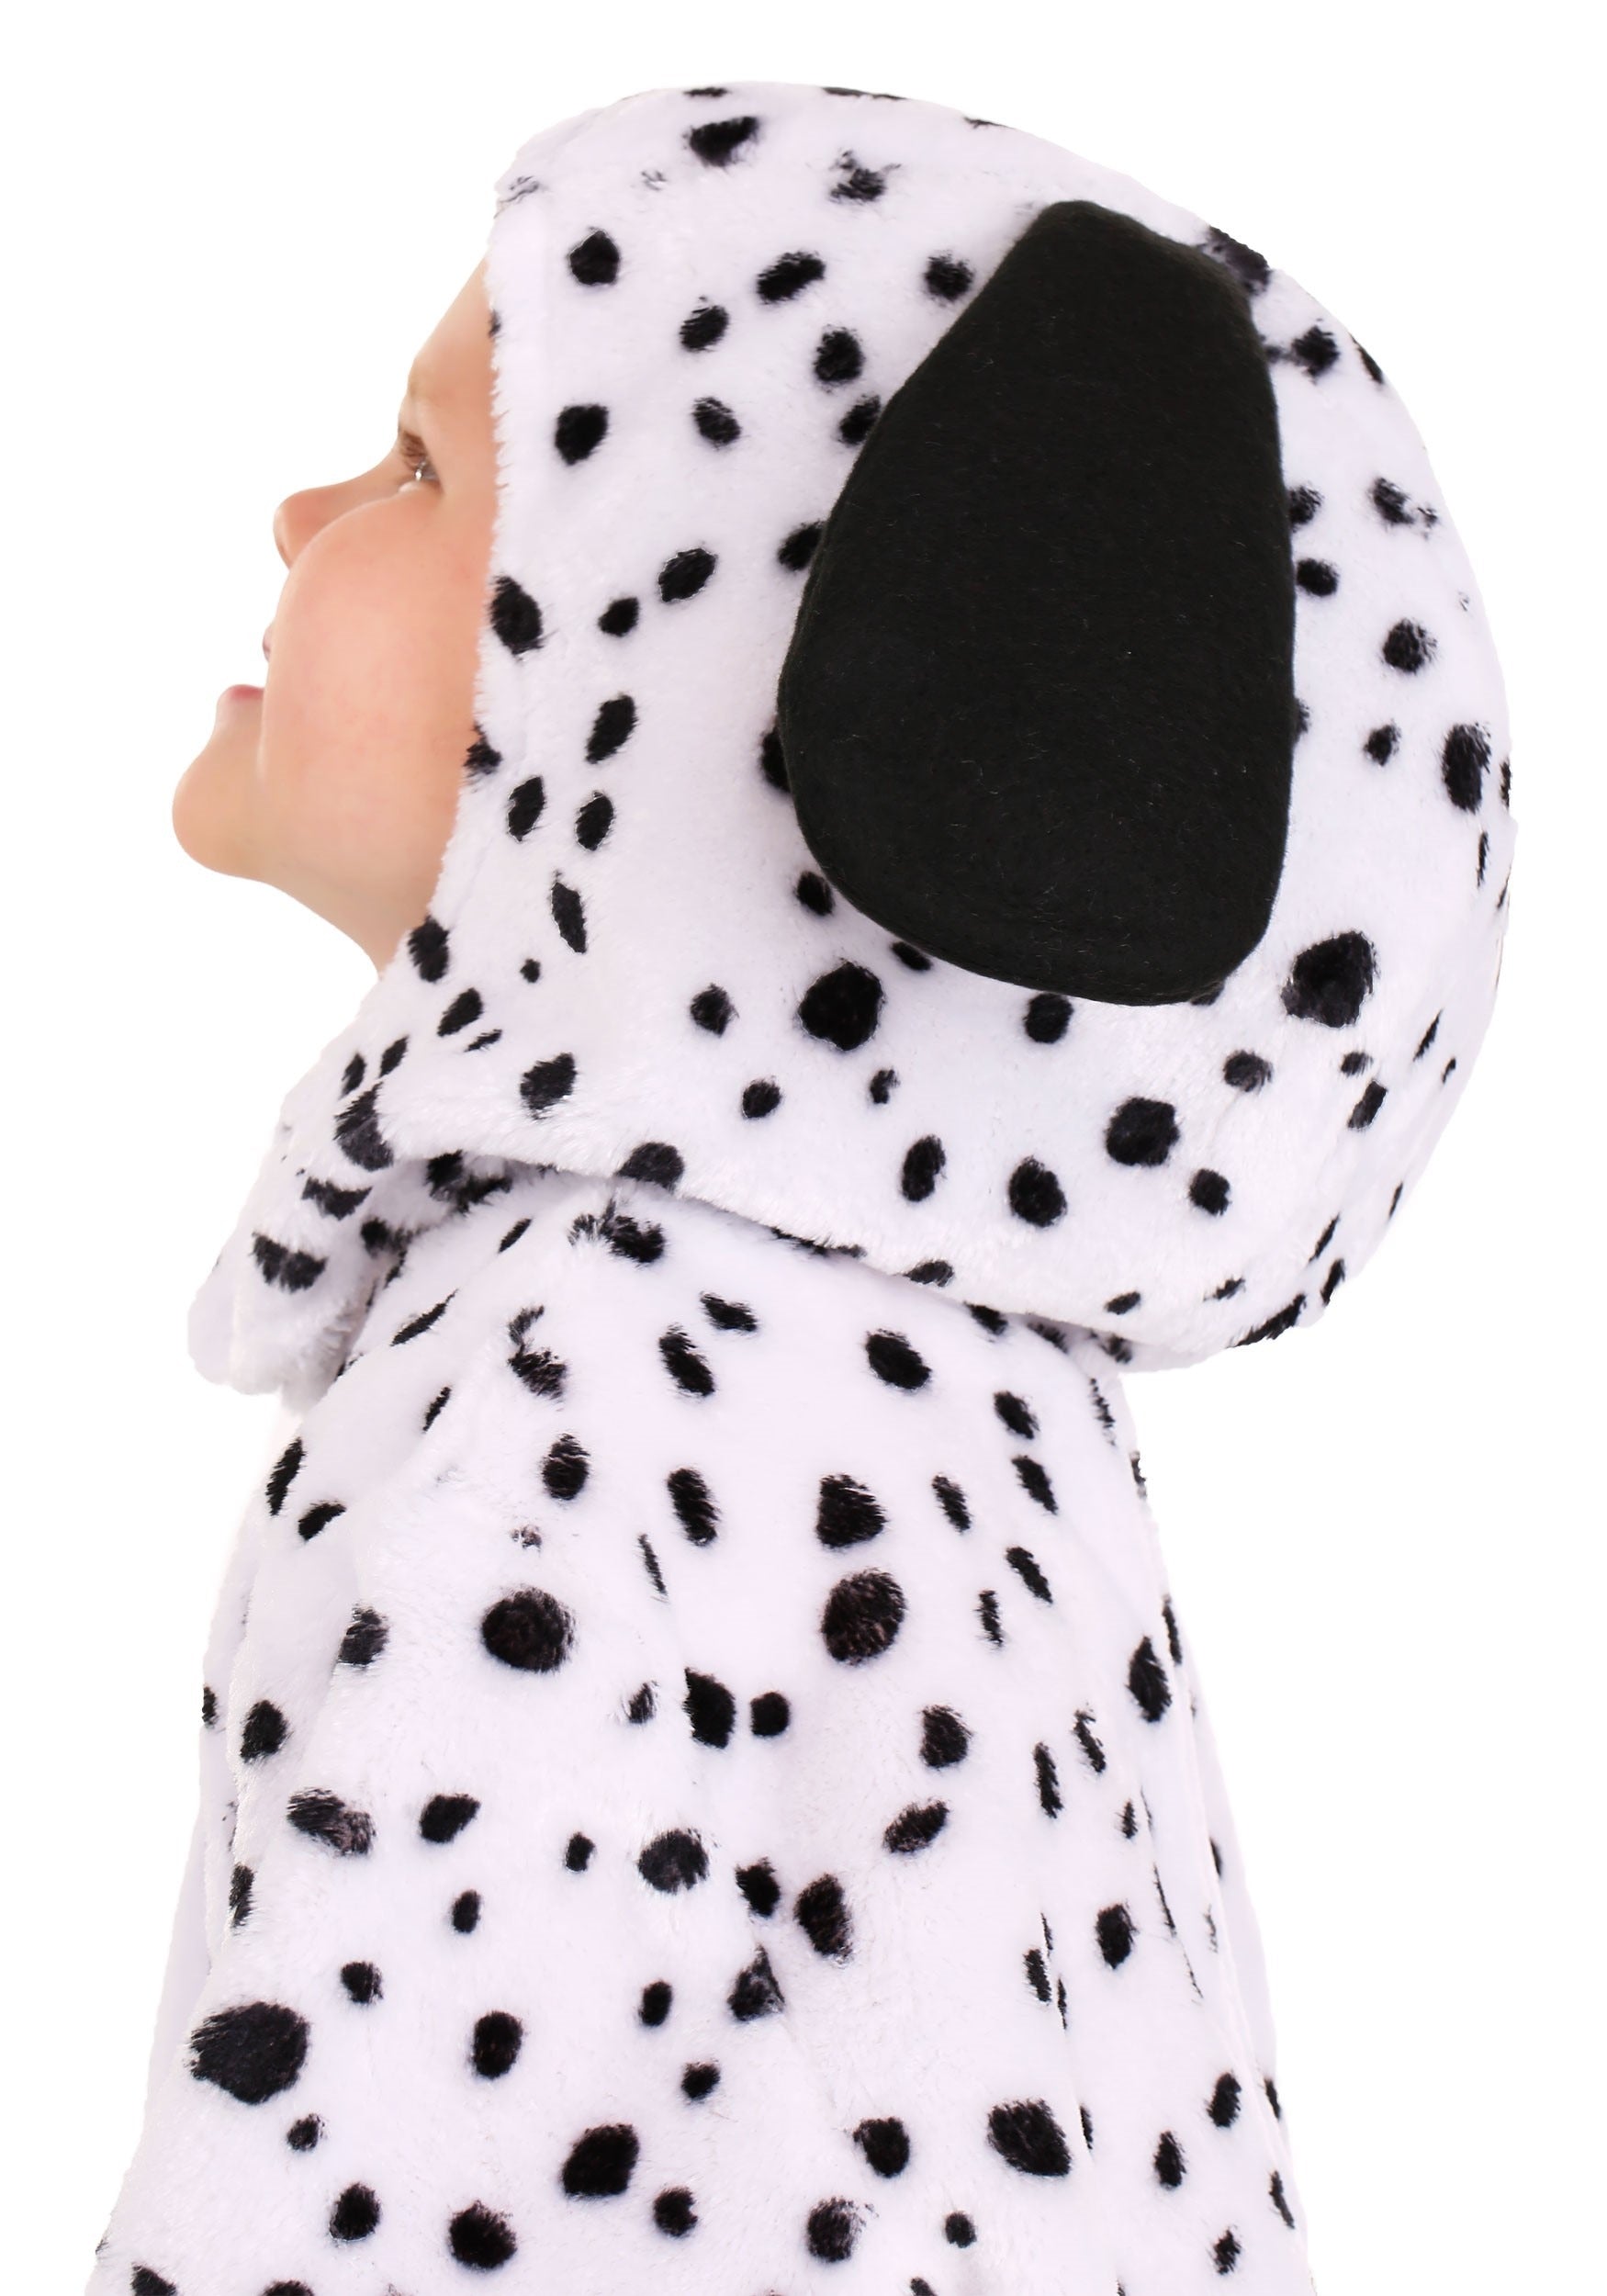 Dalmatian Puppy Toddler Costume